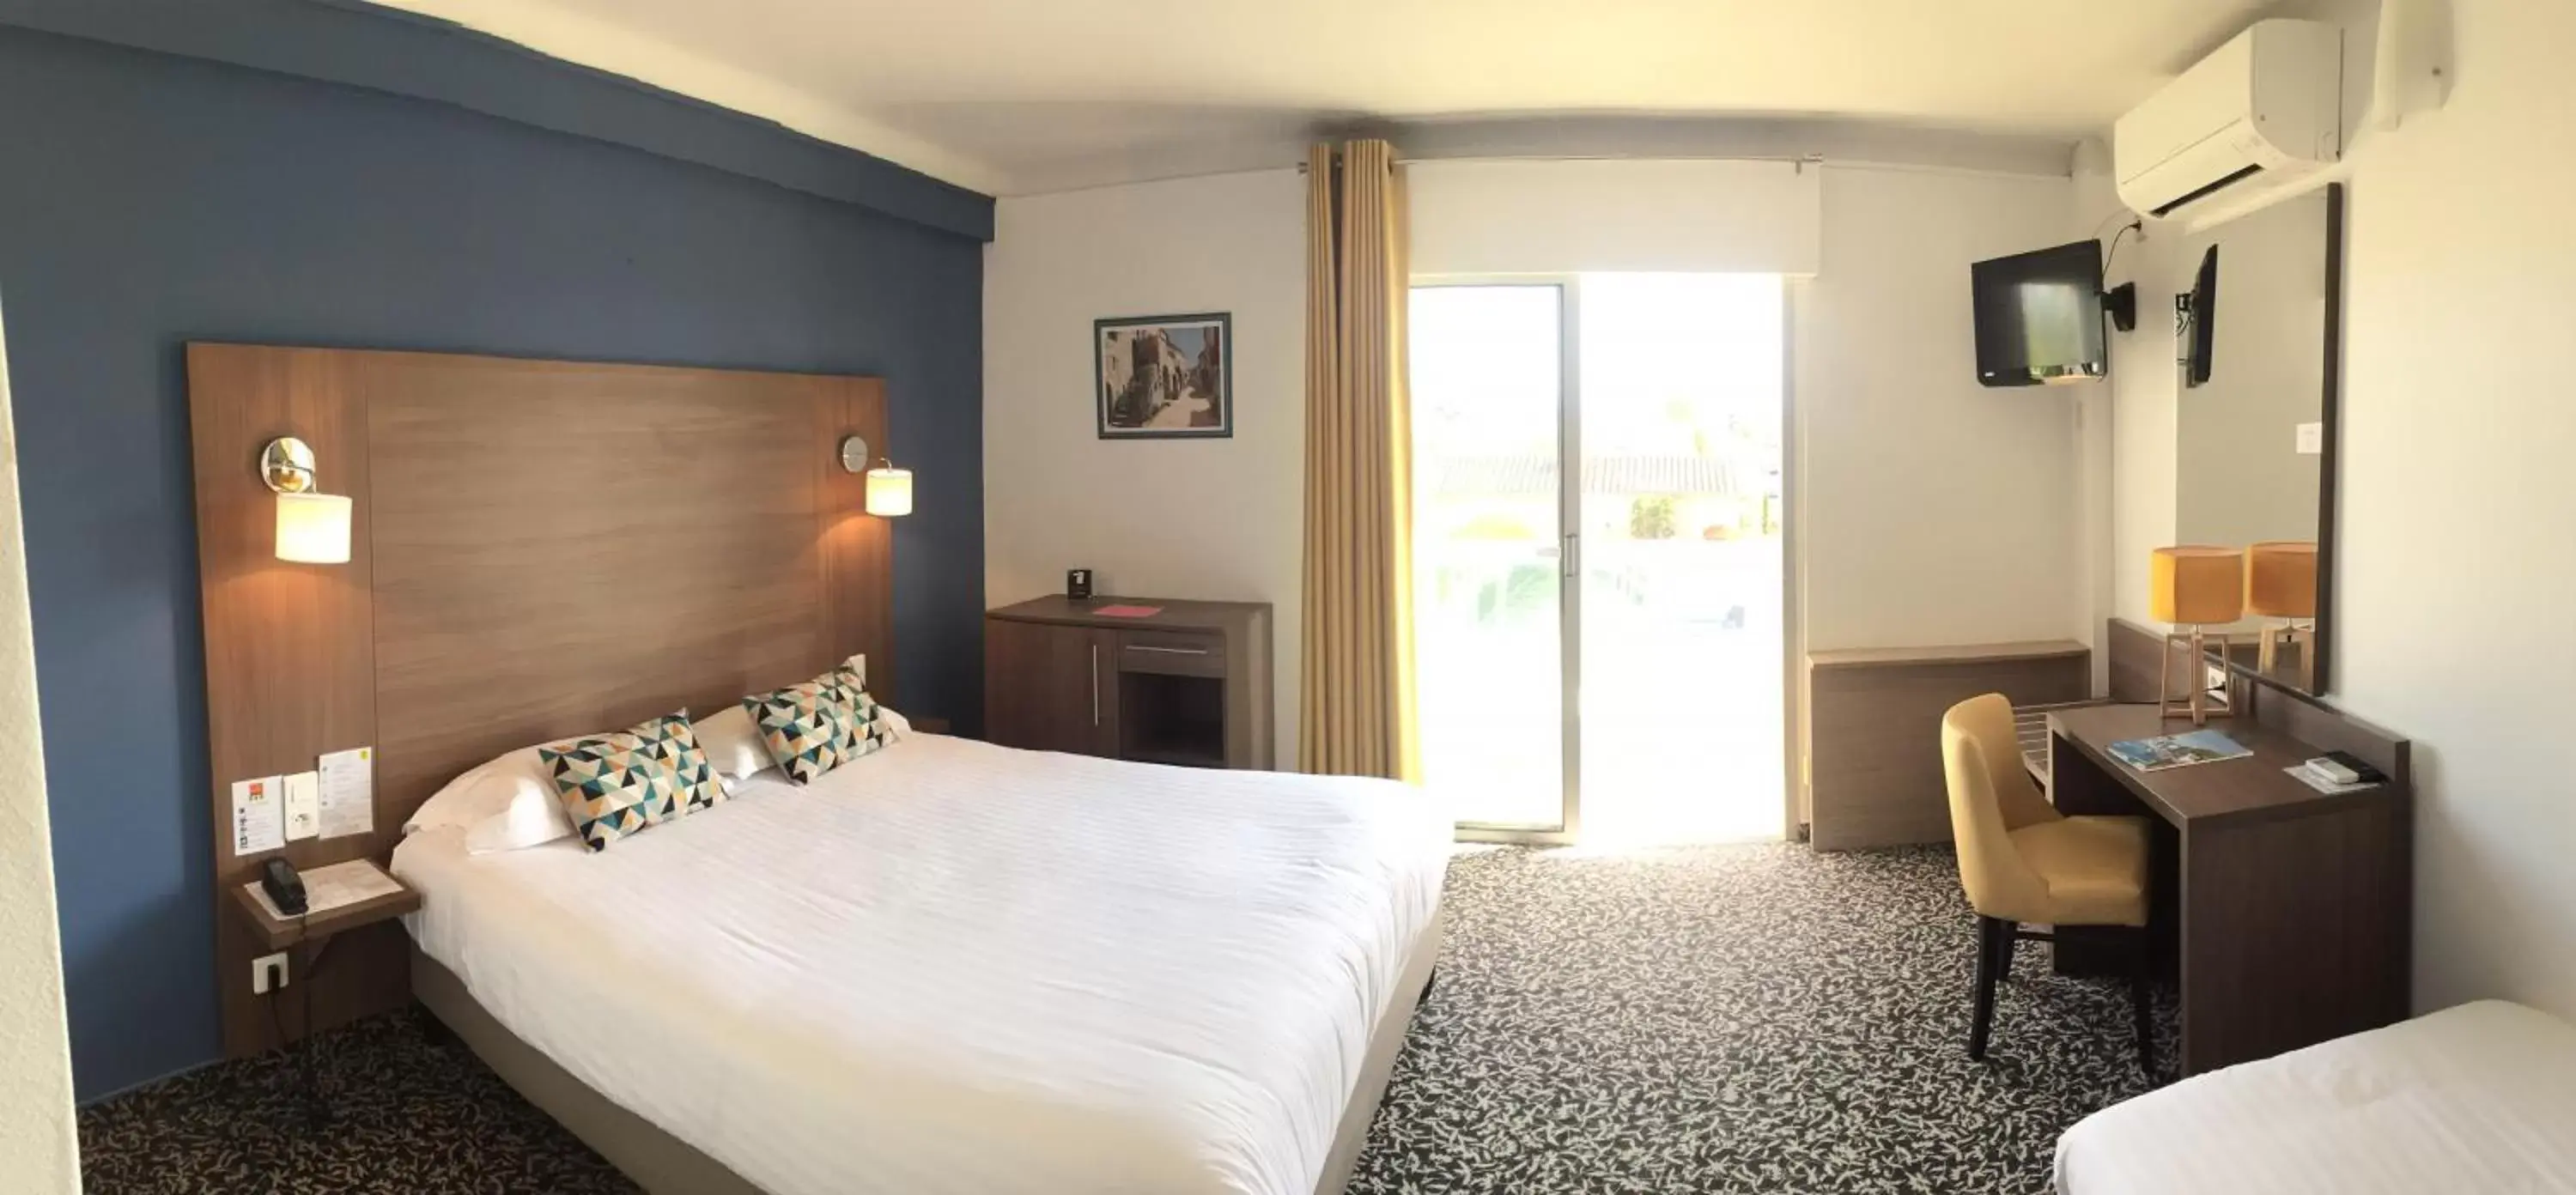 Bedroom in Le Galion Hotel et Restaurant Canet Plage - Logis